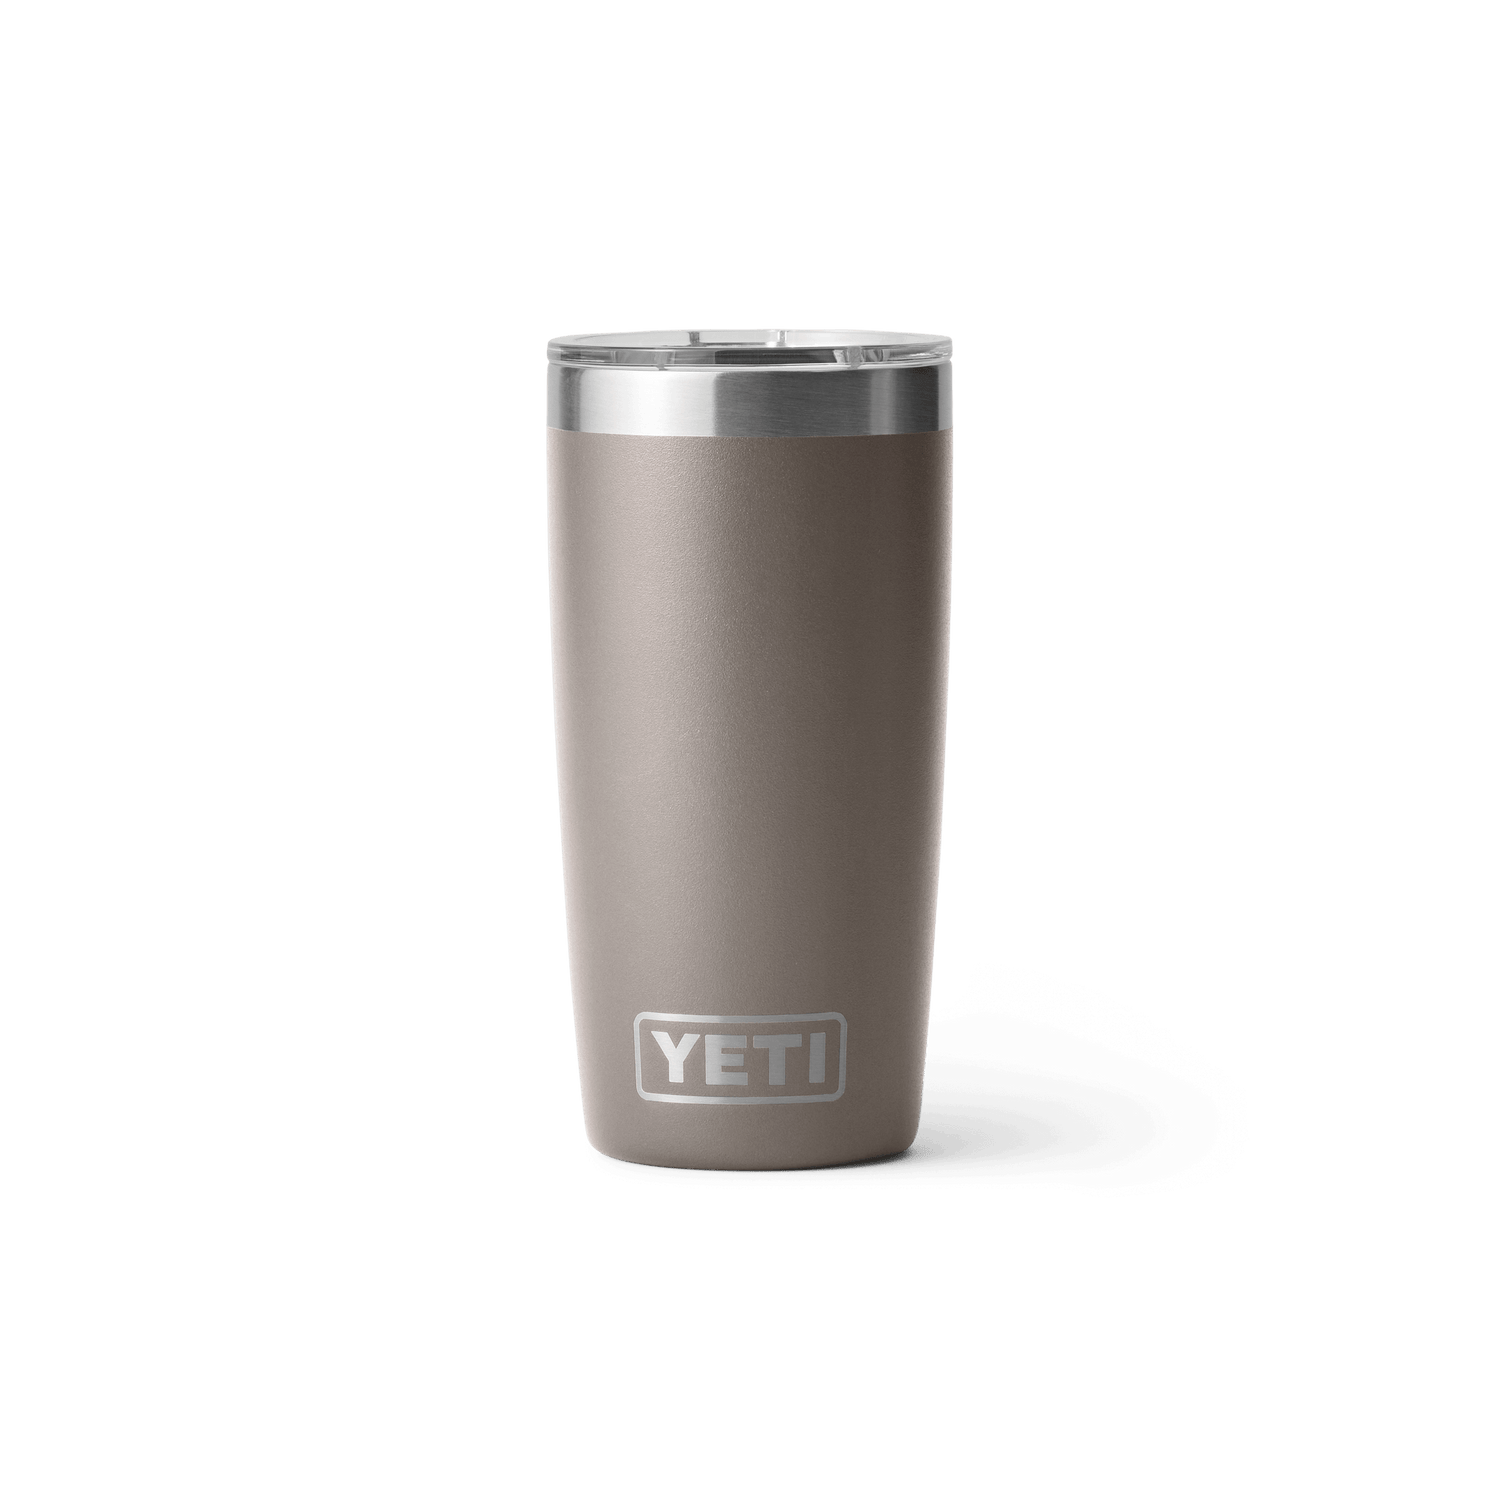 YETI® Silo 22.7 L Water Cooler – YETI EUROPE